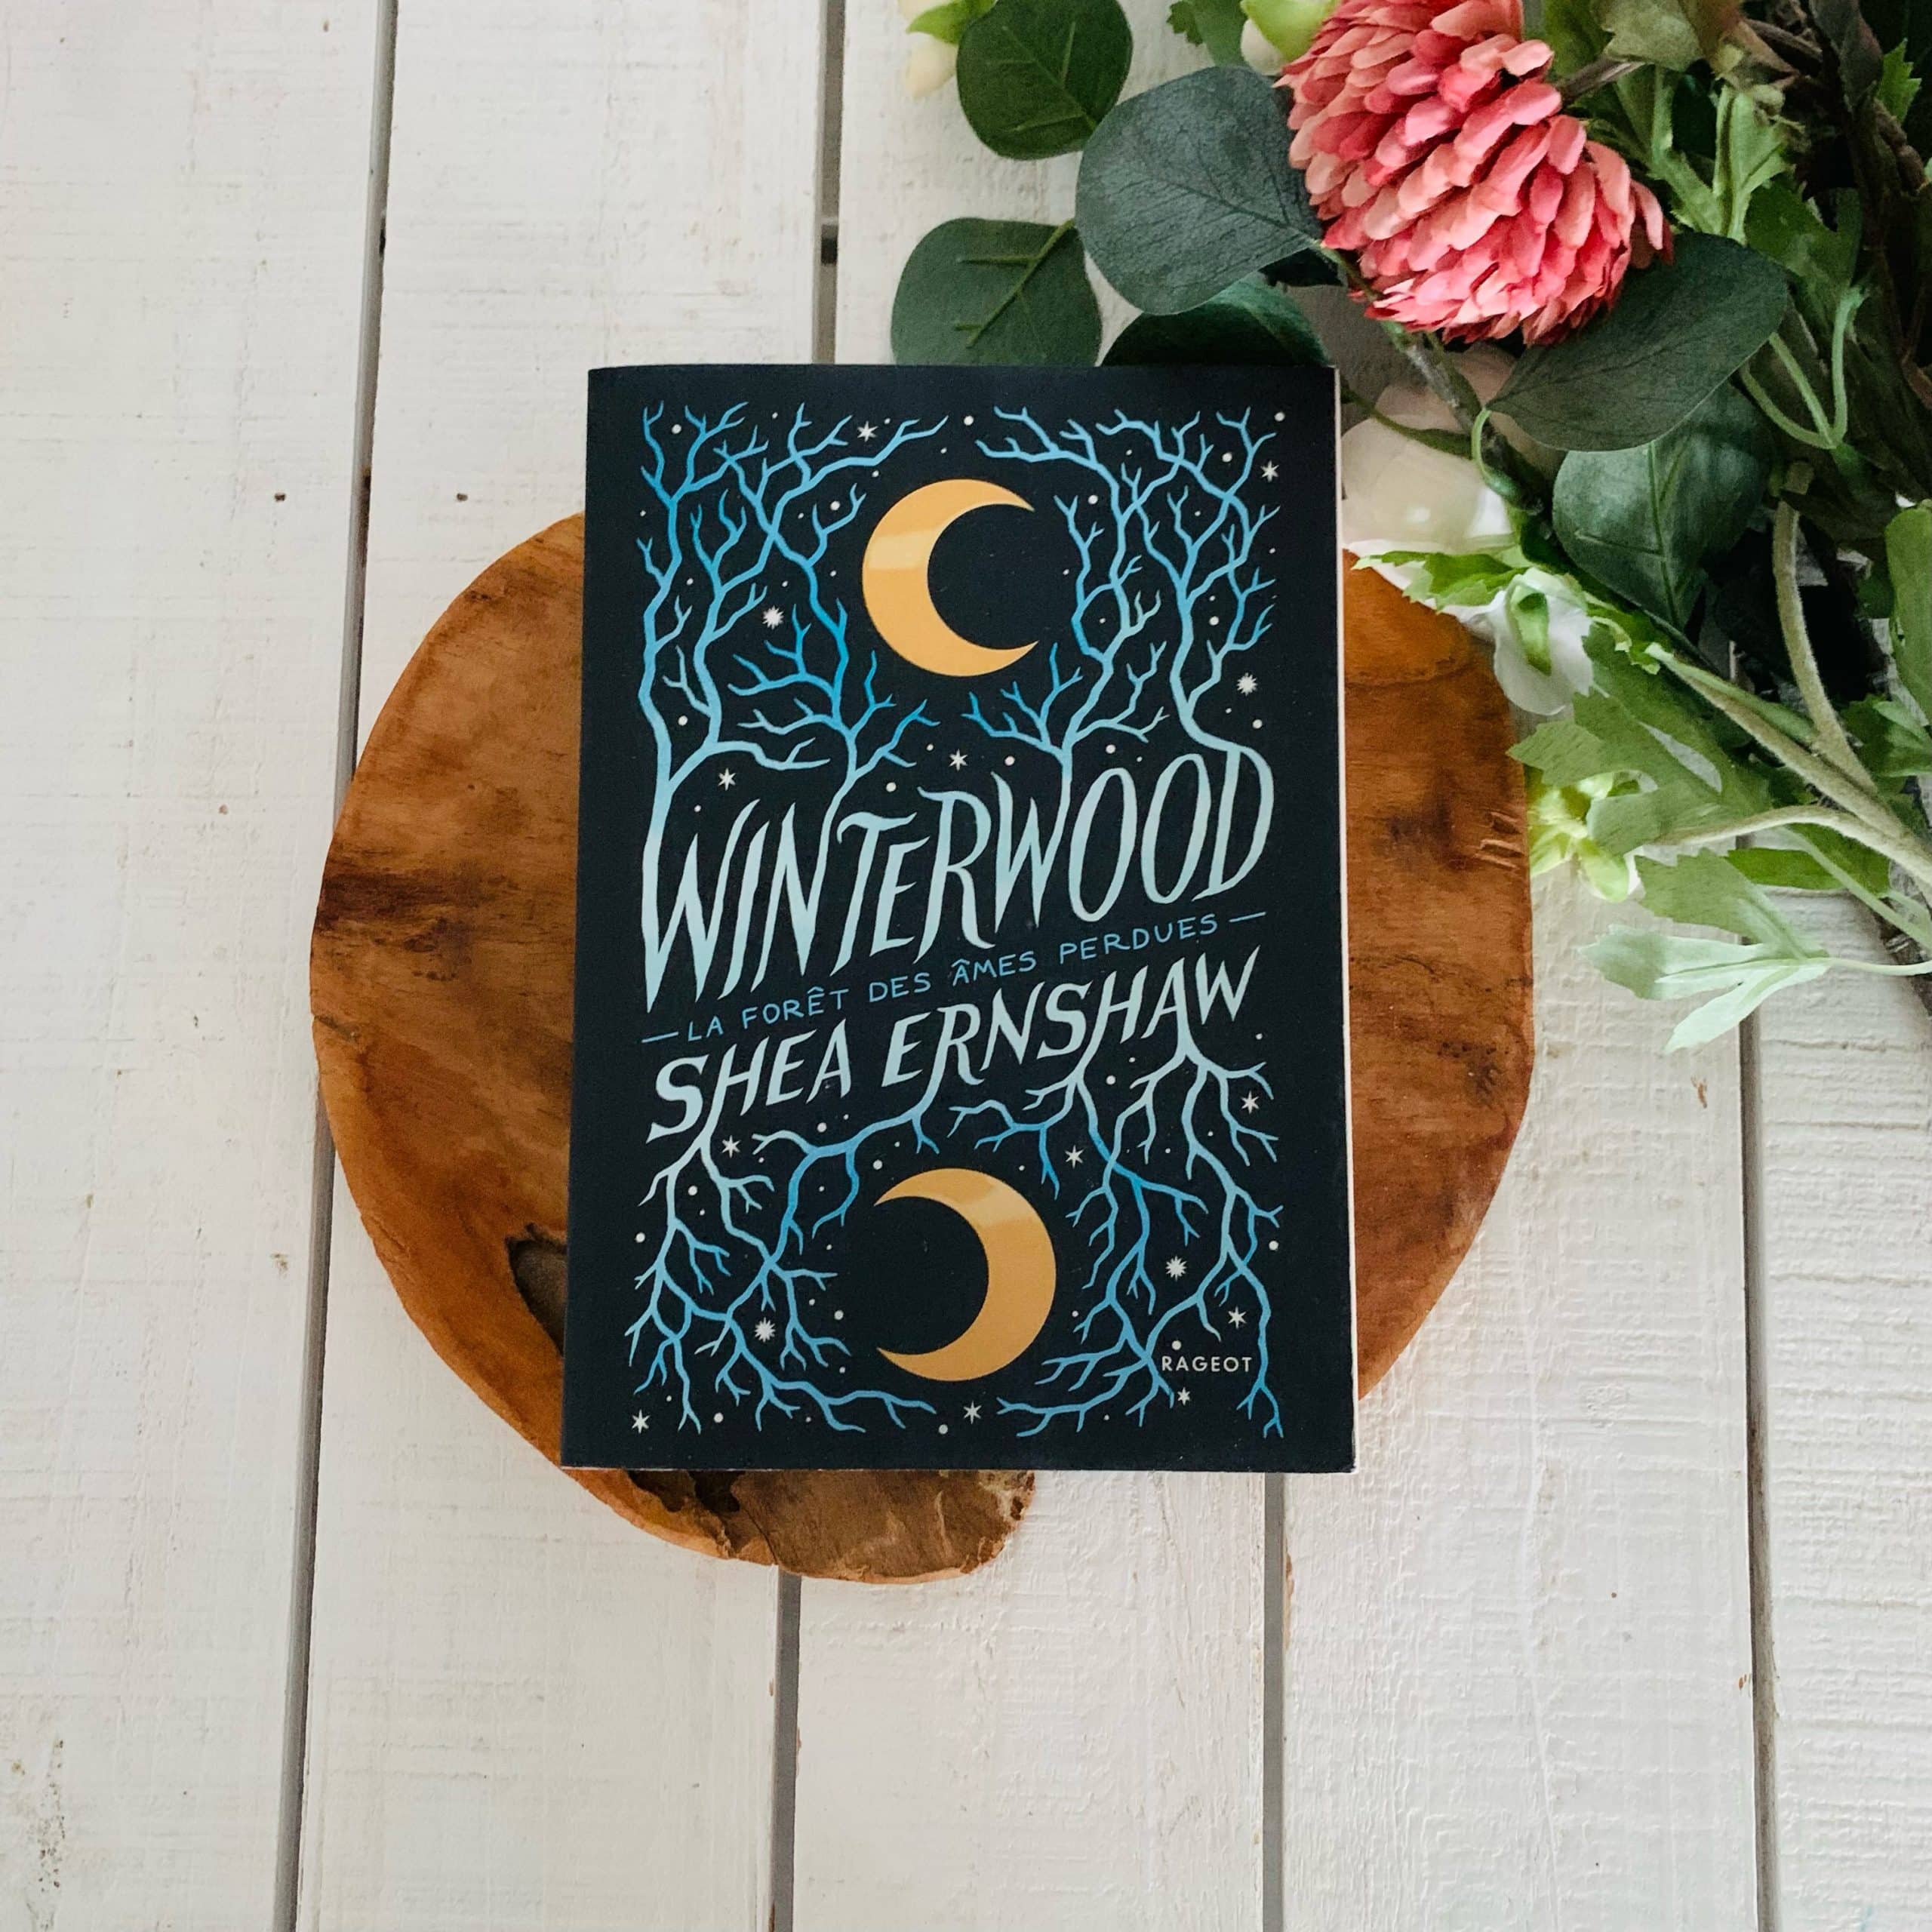 Winterwood : la forêt des âmes perdues - Shea Ernshaw